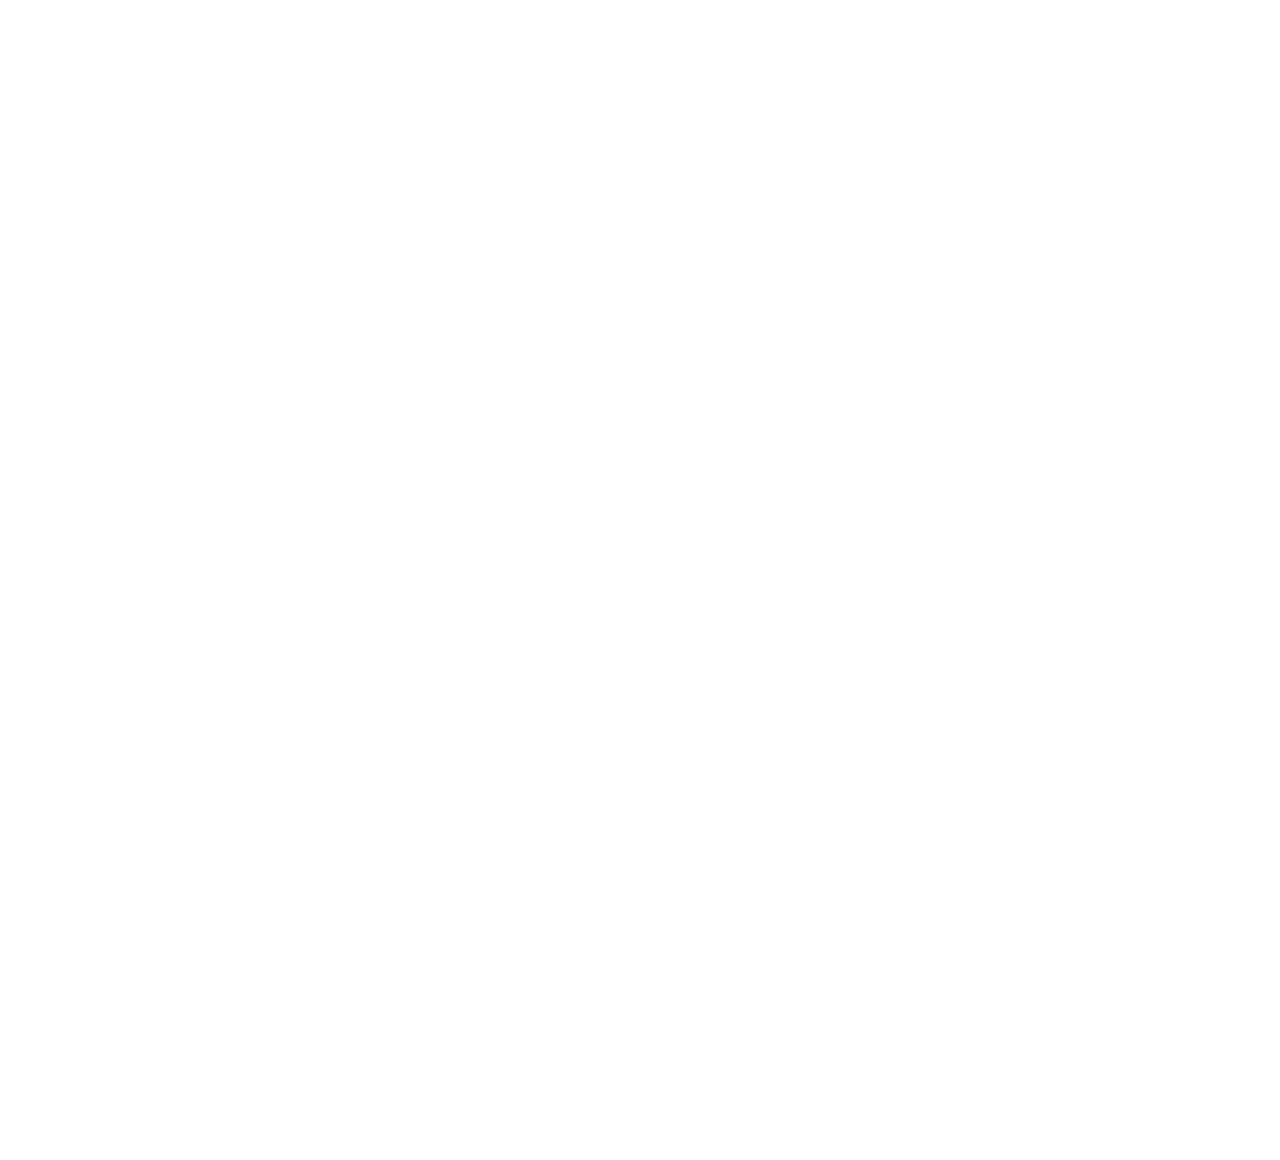 Hypnosis Eye Image